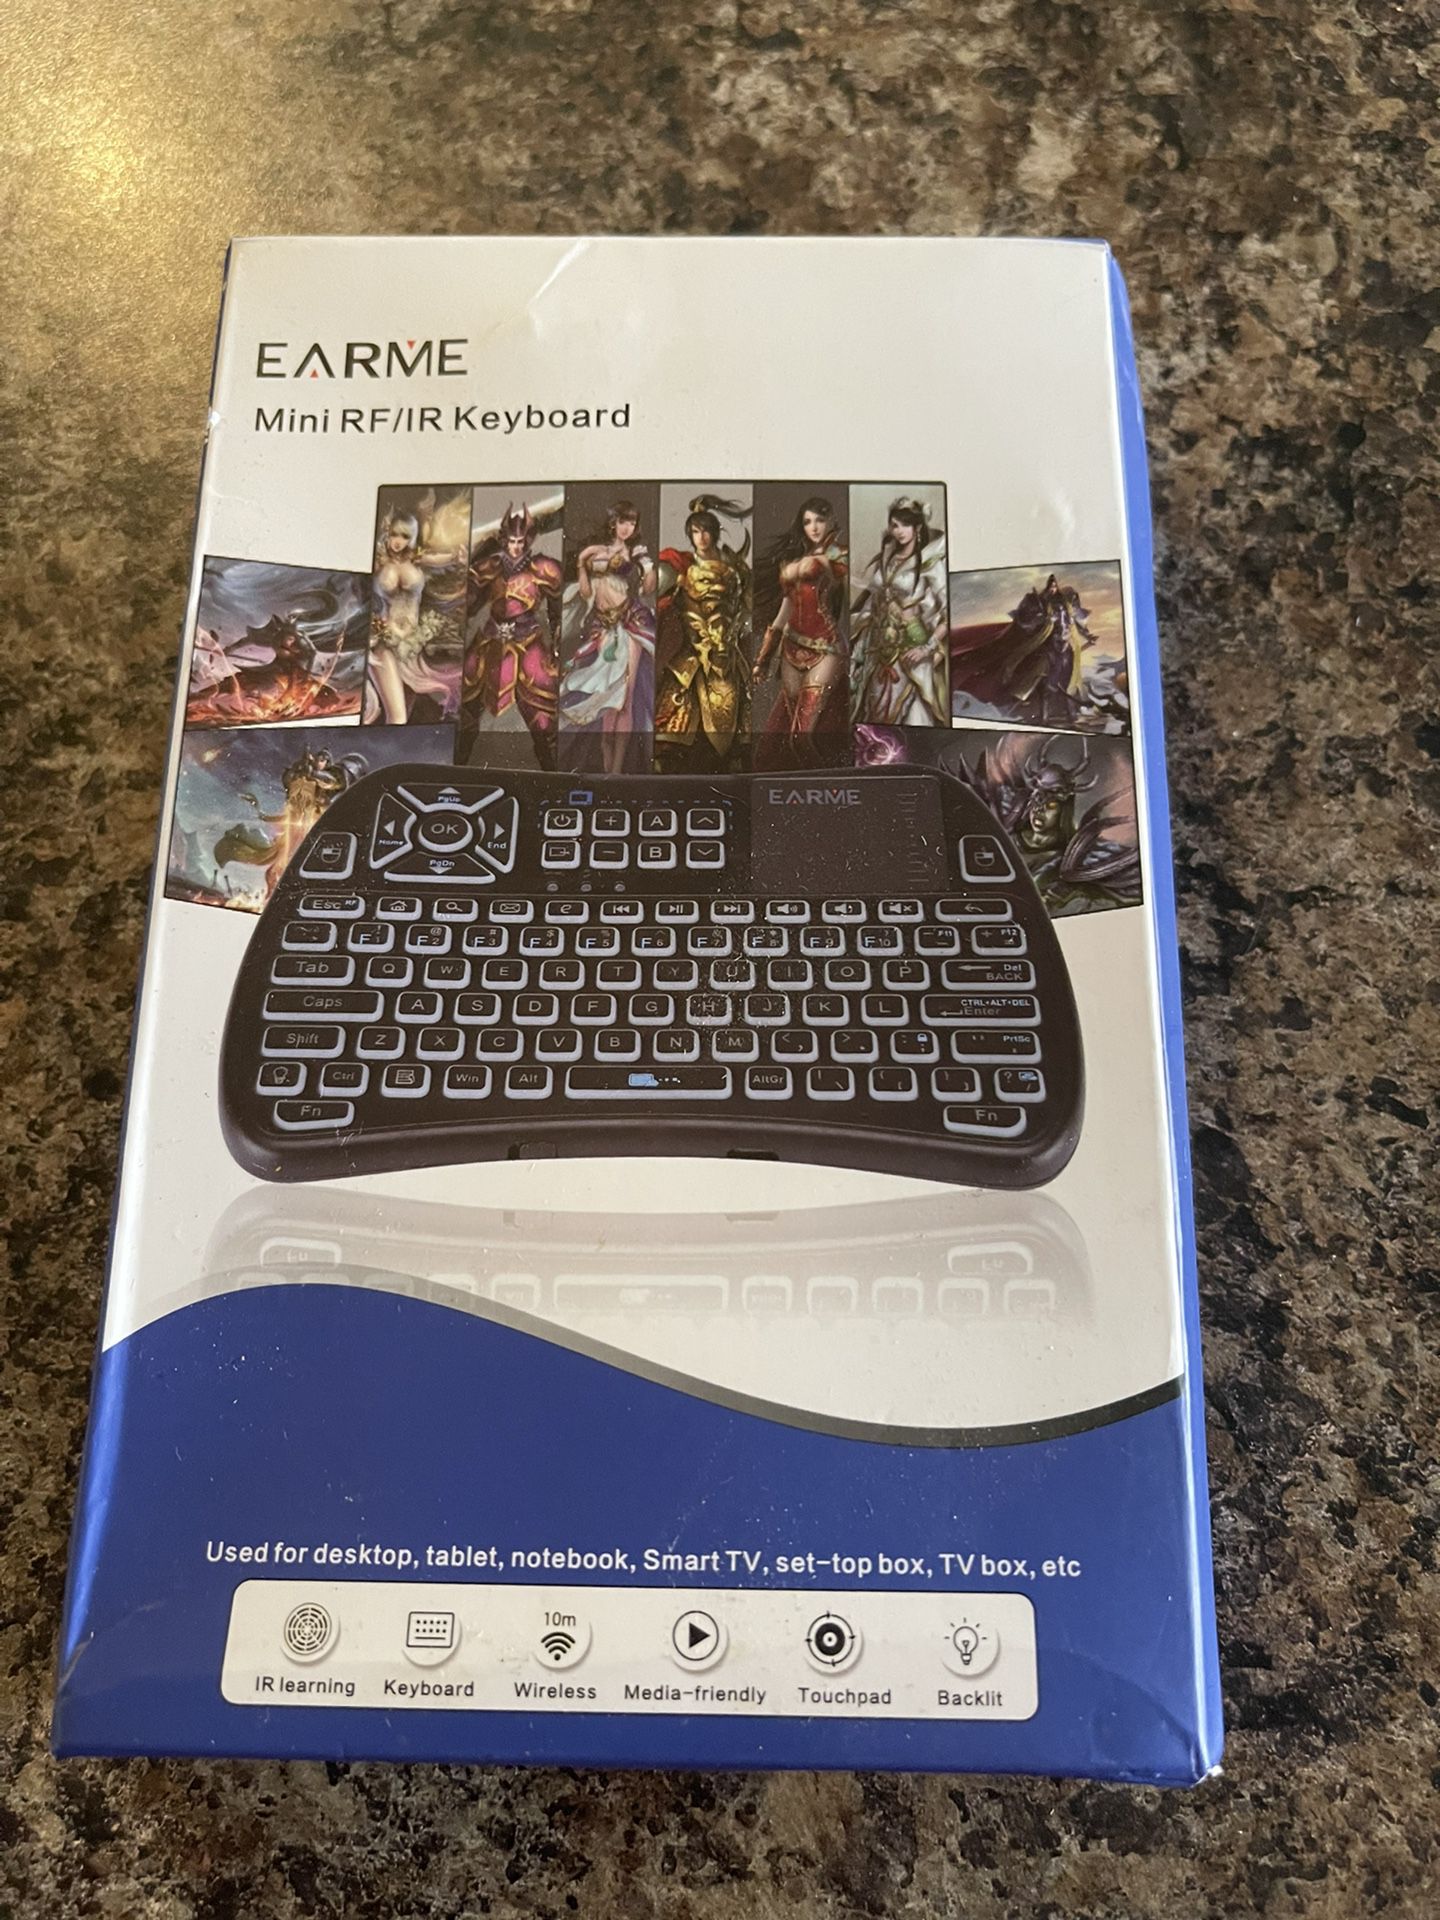 Mini RF/IR keyboard new in the box $25